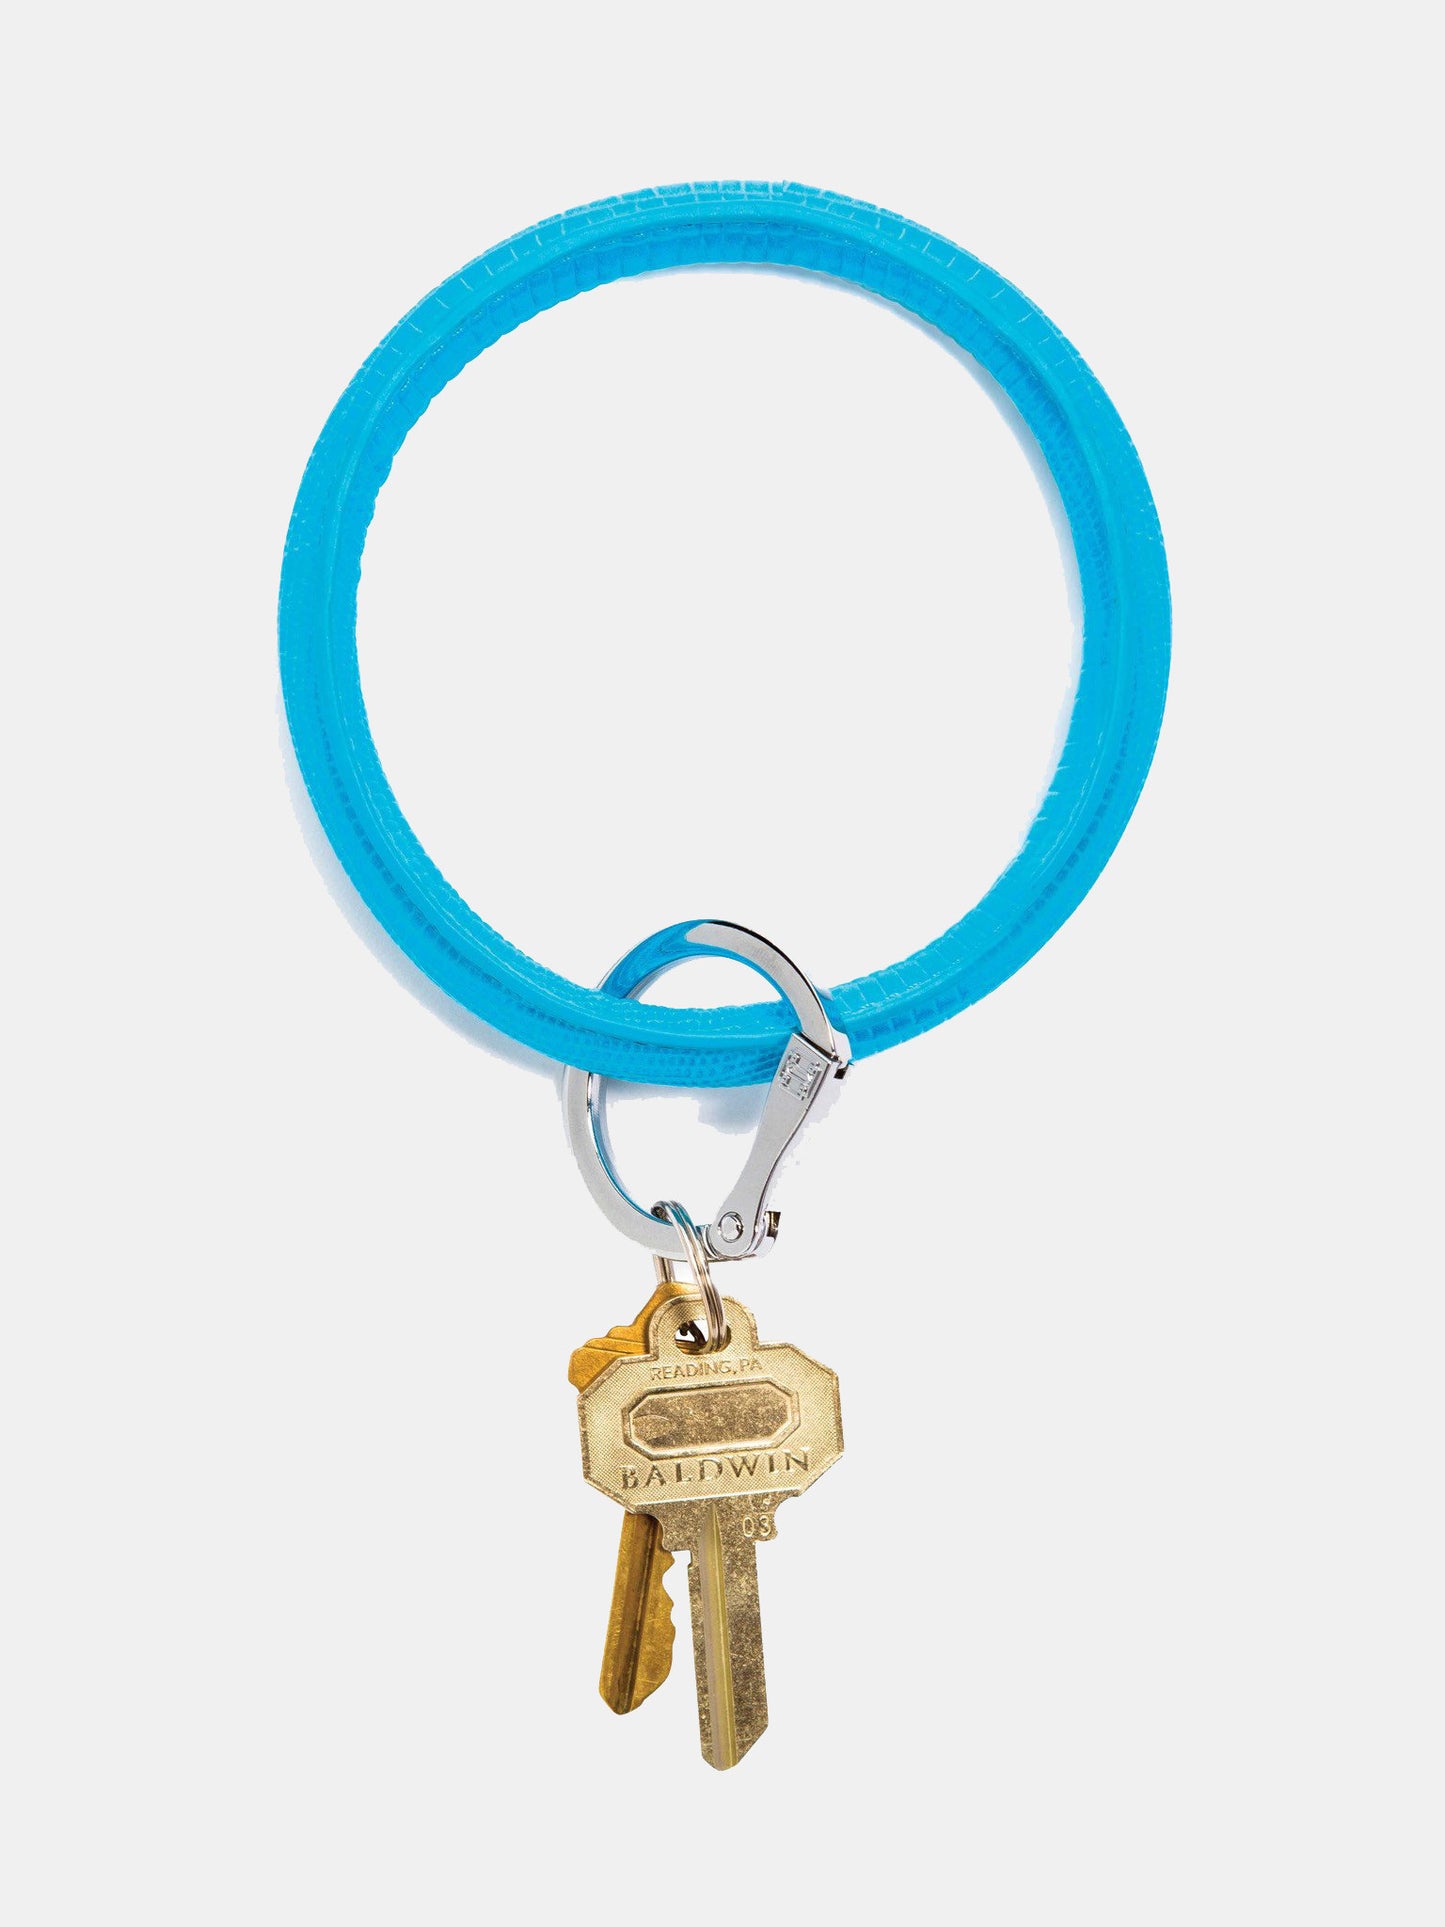 O-Venture Big O Leather Key Ring